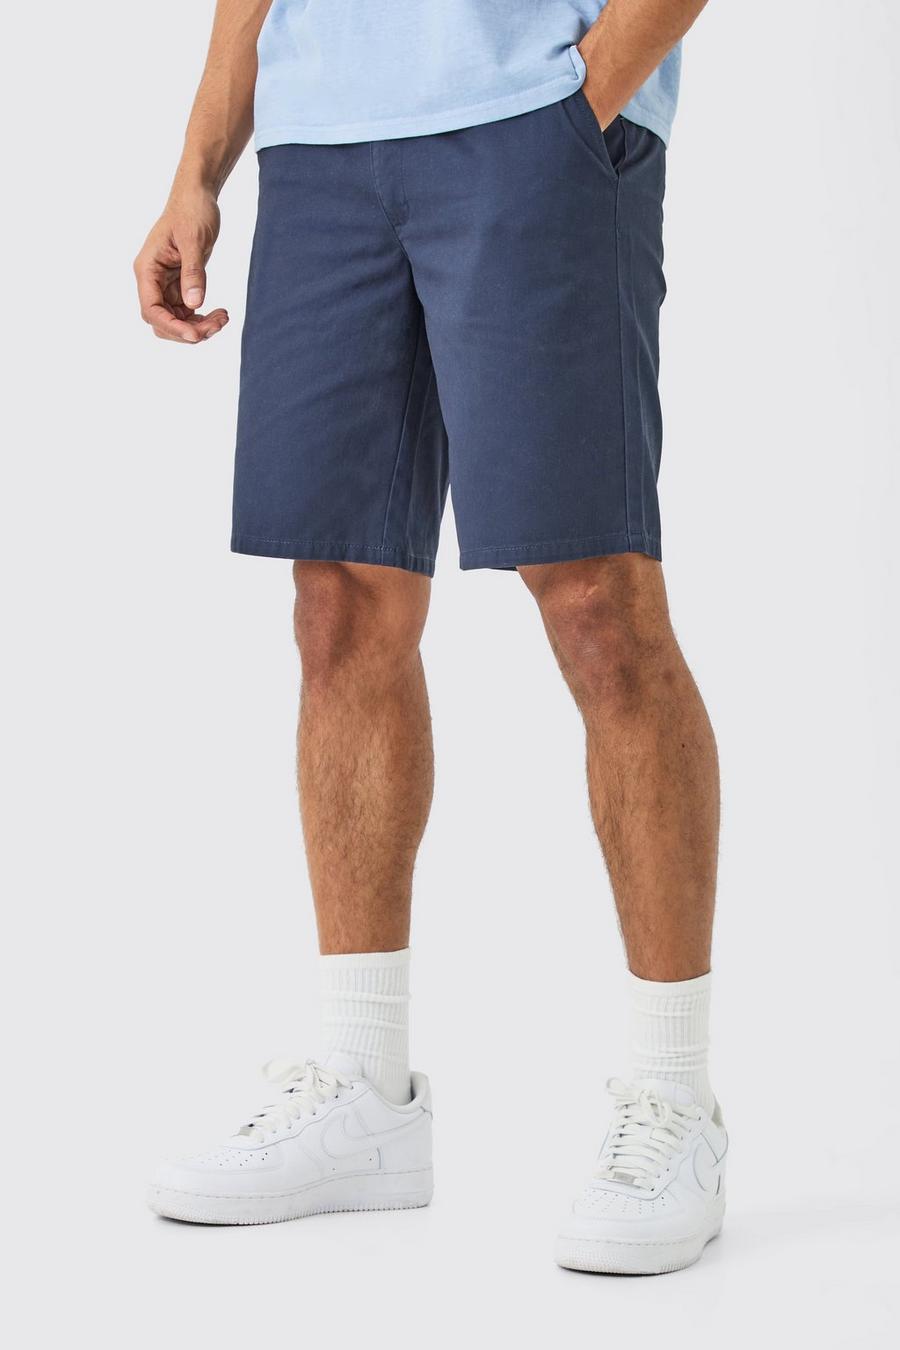 Pantalón corto holgado azul marino con cintura fija, Navy